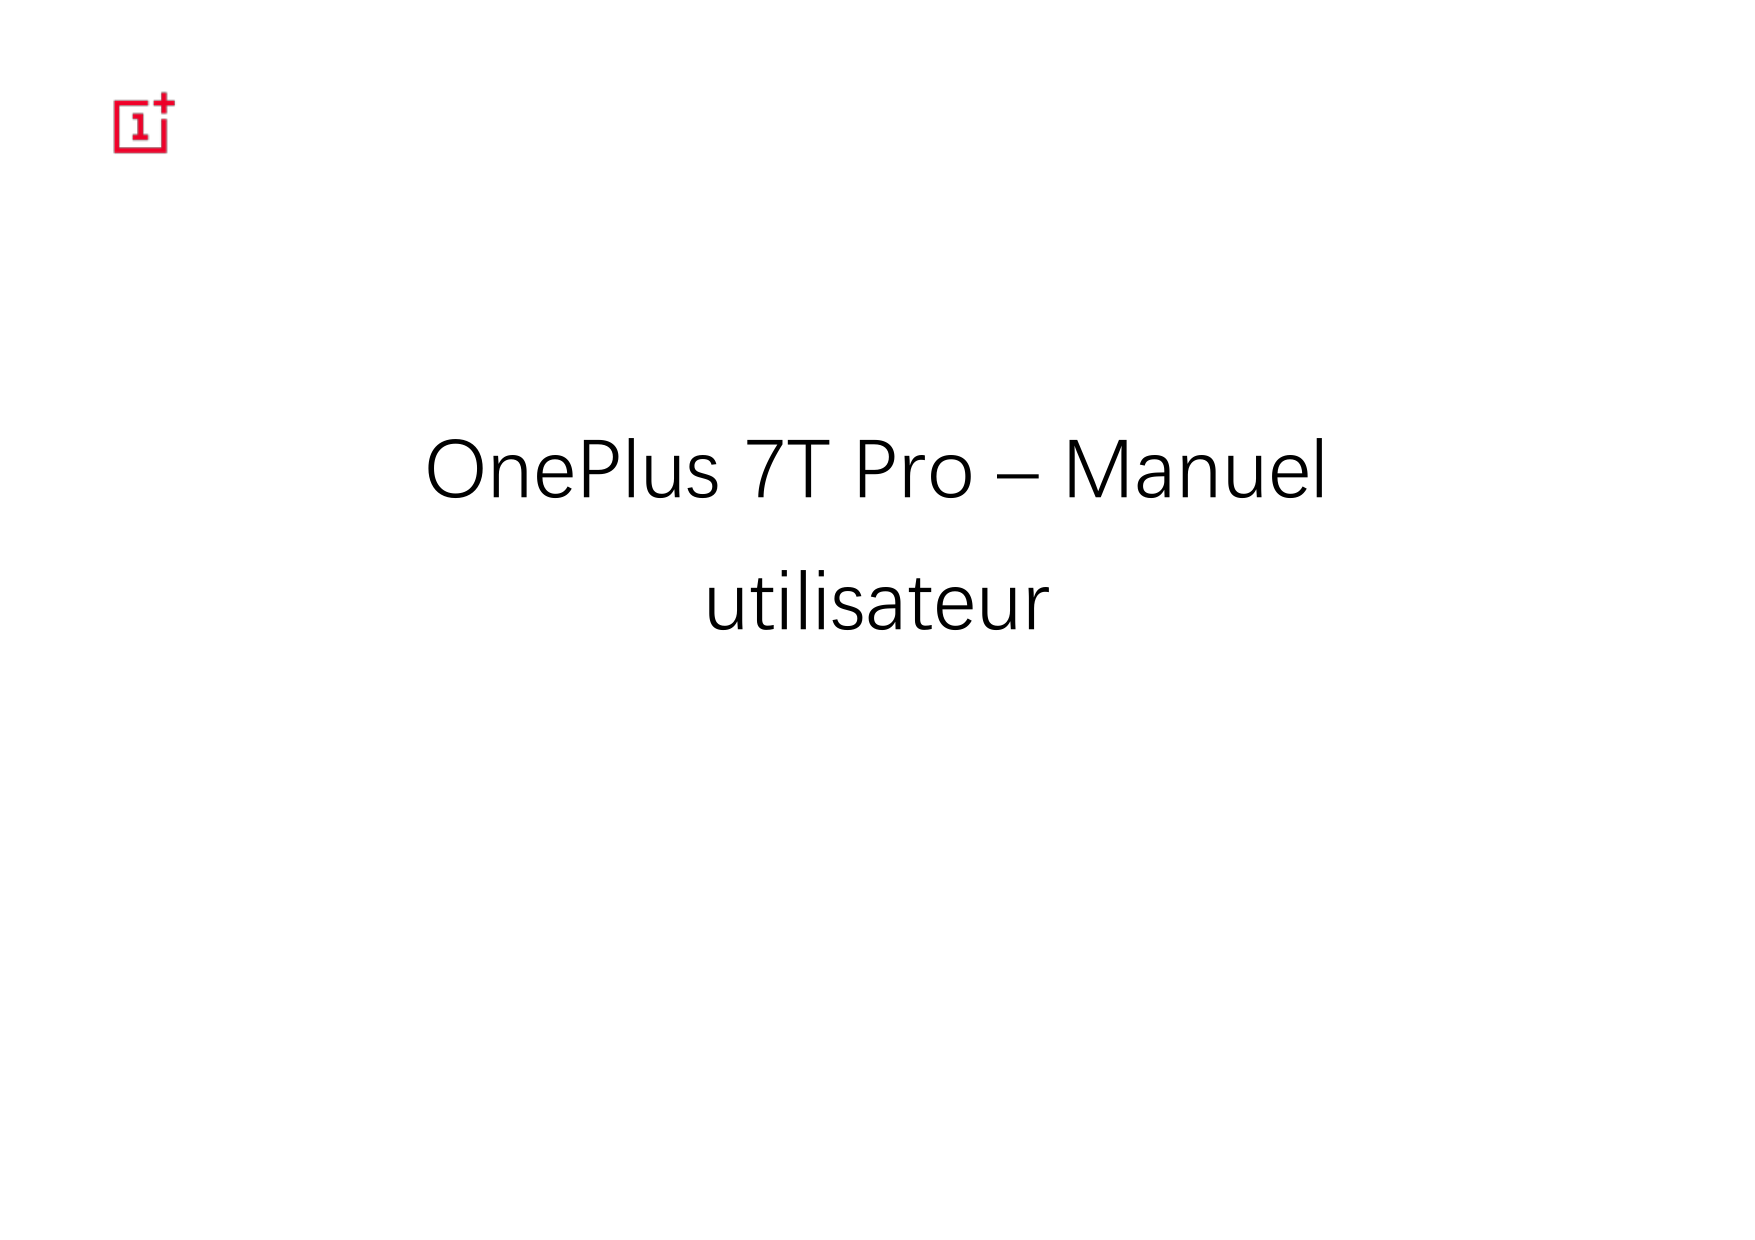 OnePlus 7T Pro – Manuelutilisateur